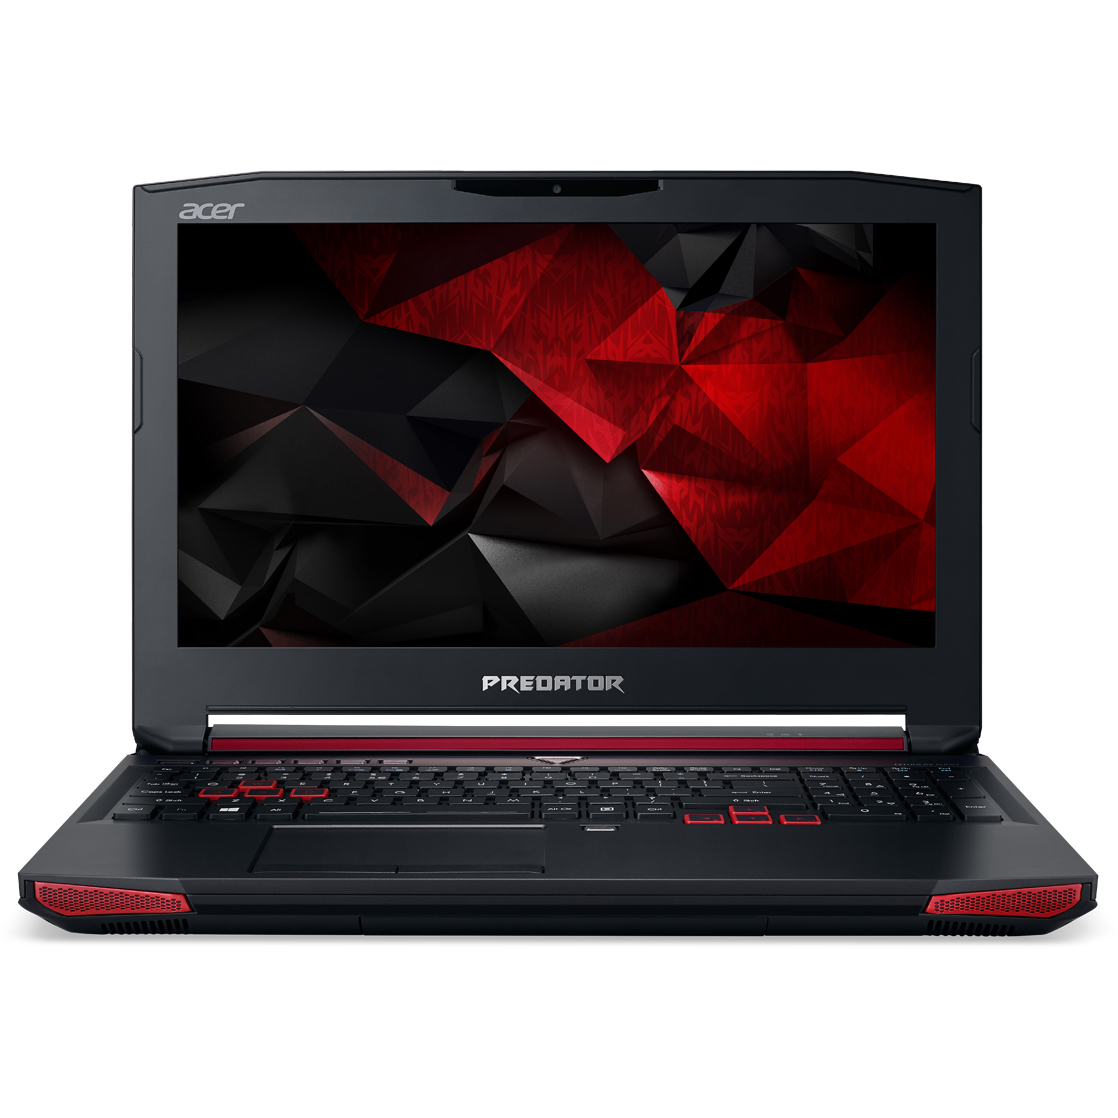  Laptop Gaming Acer Predator G9-591, Intel Core i5-6300HQ, 8GB DDR4, HDD 1TB, nVidia GeForce GTX 970M 3GB, Linux 